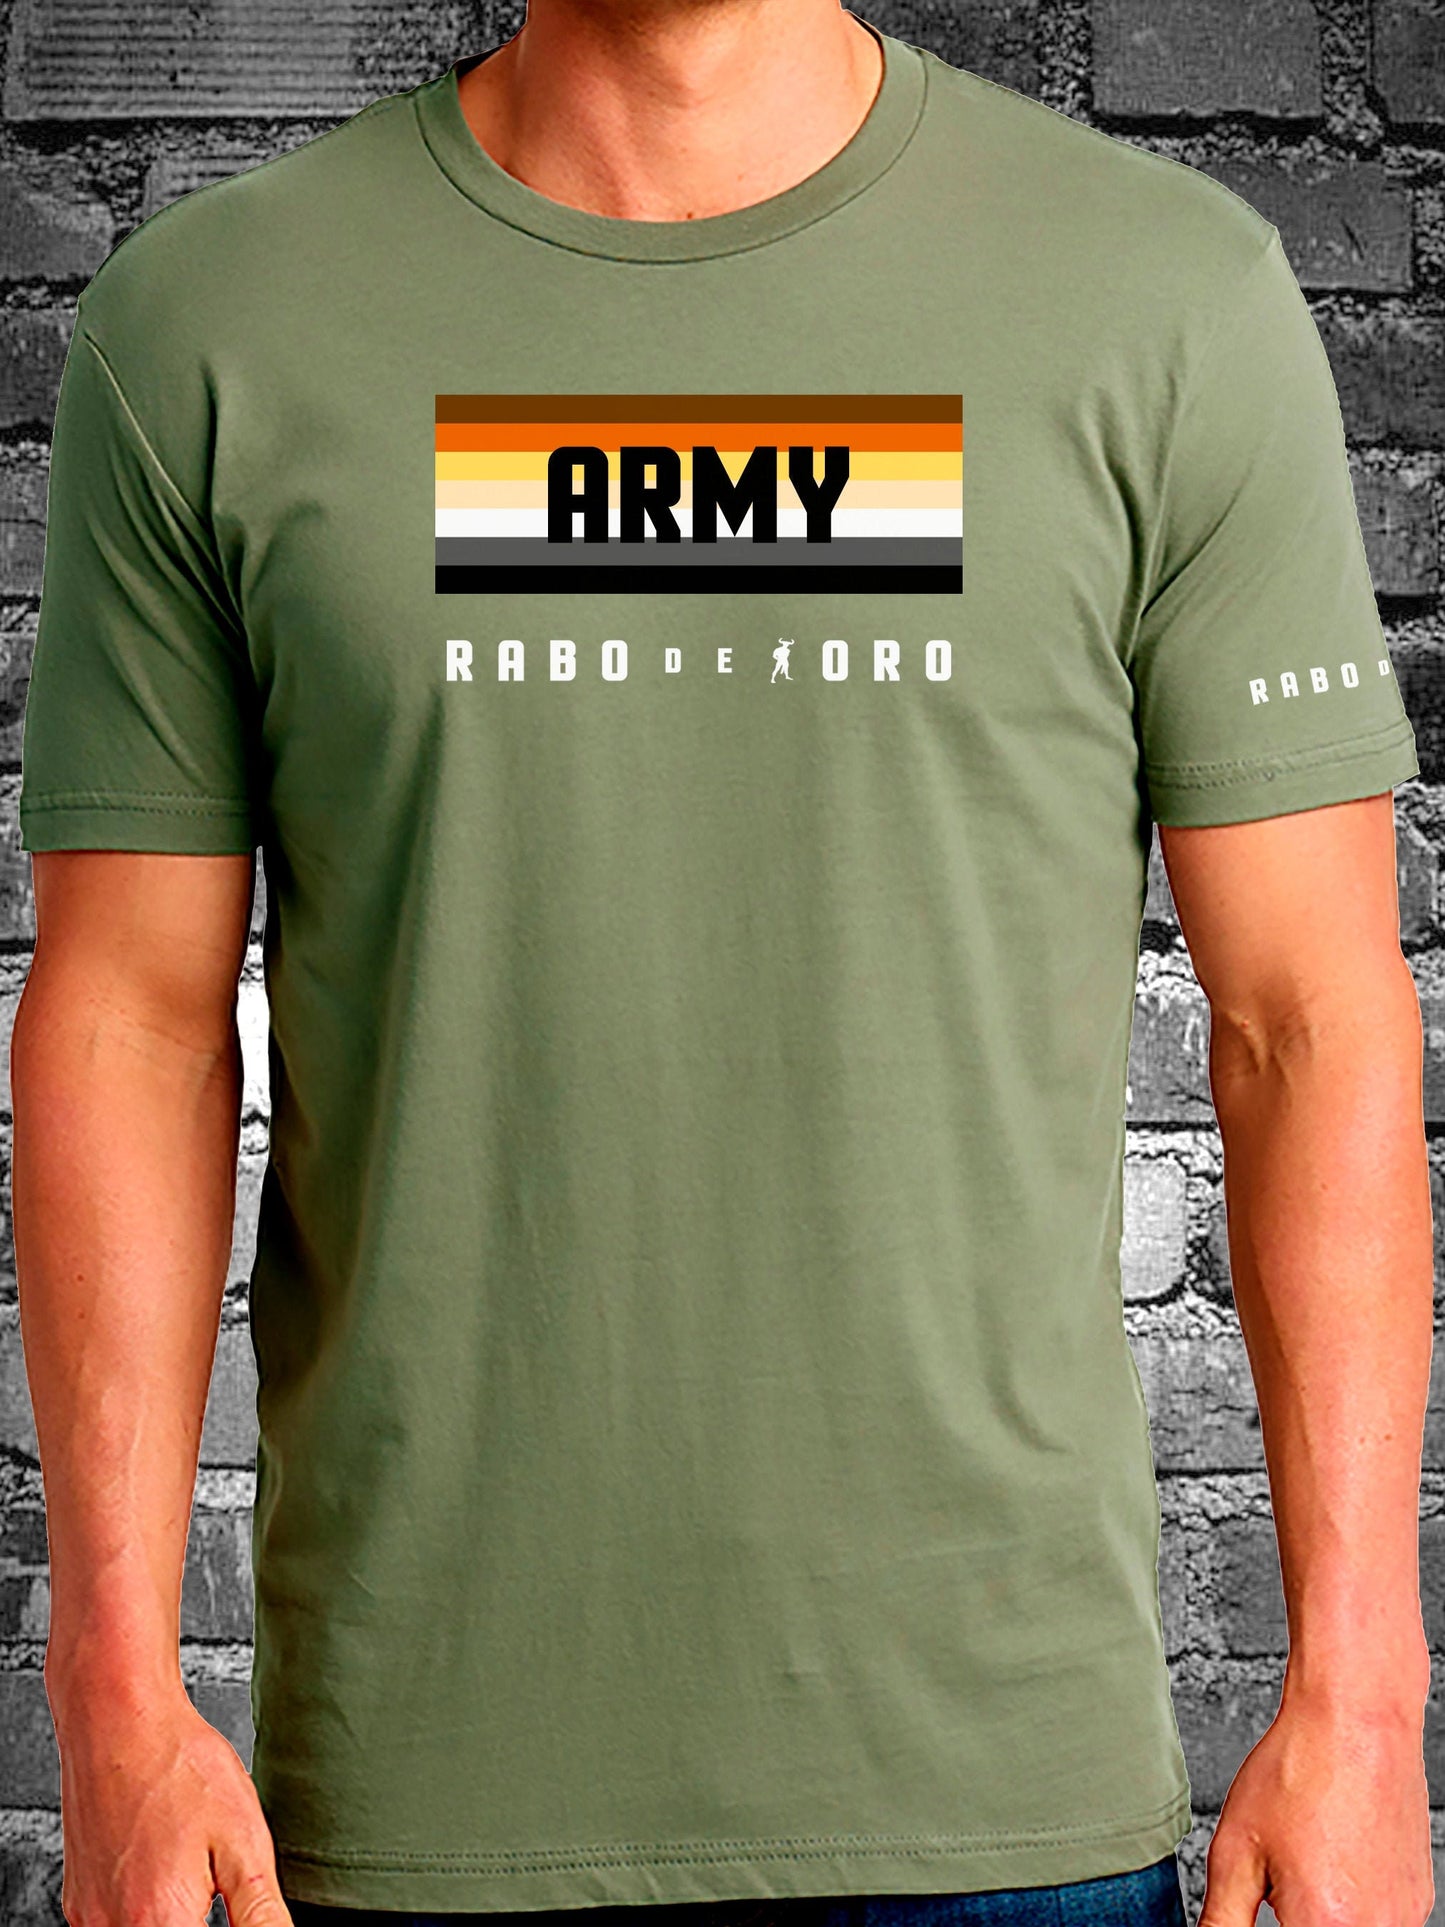 ARMY BEAR Camiseta verde oliva con detalle de la bandera de orgullo oso